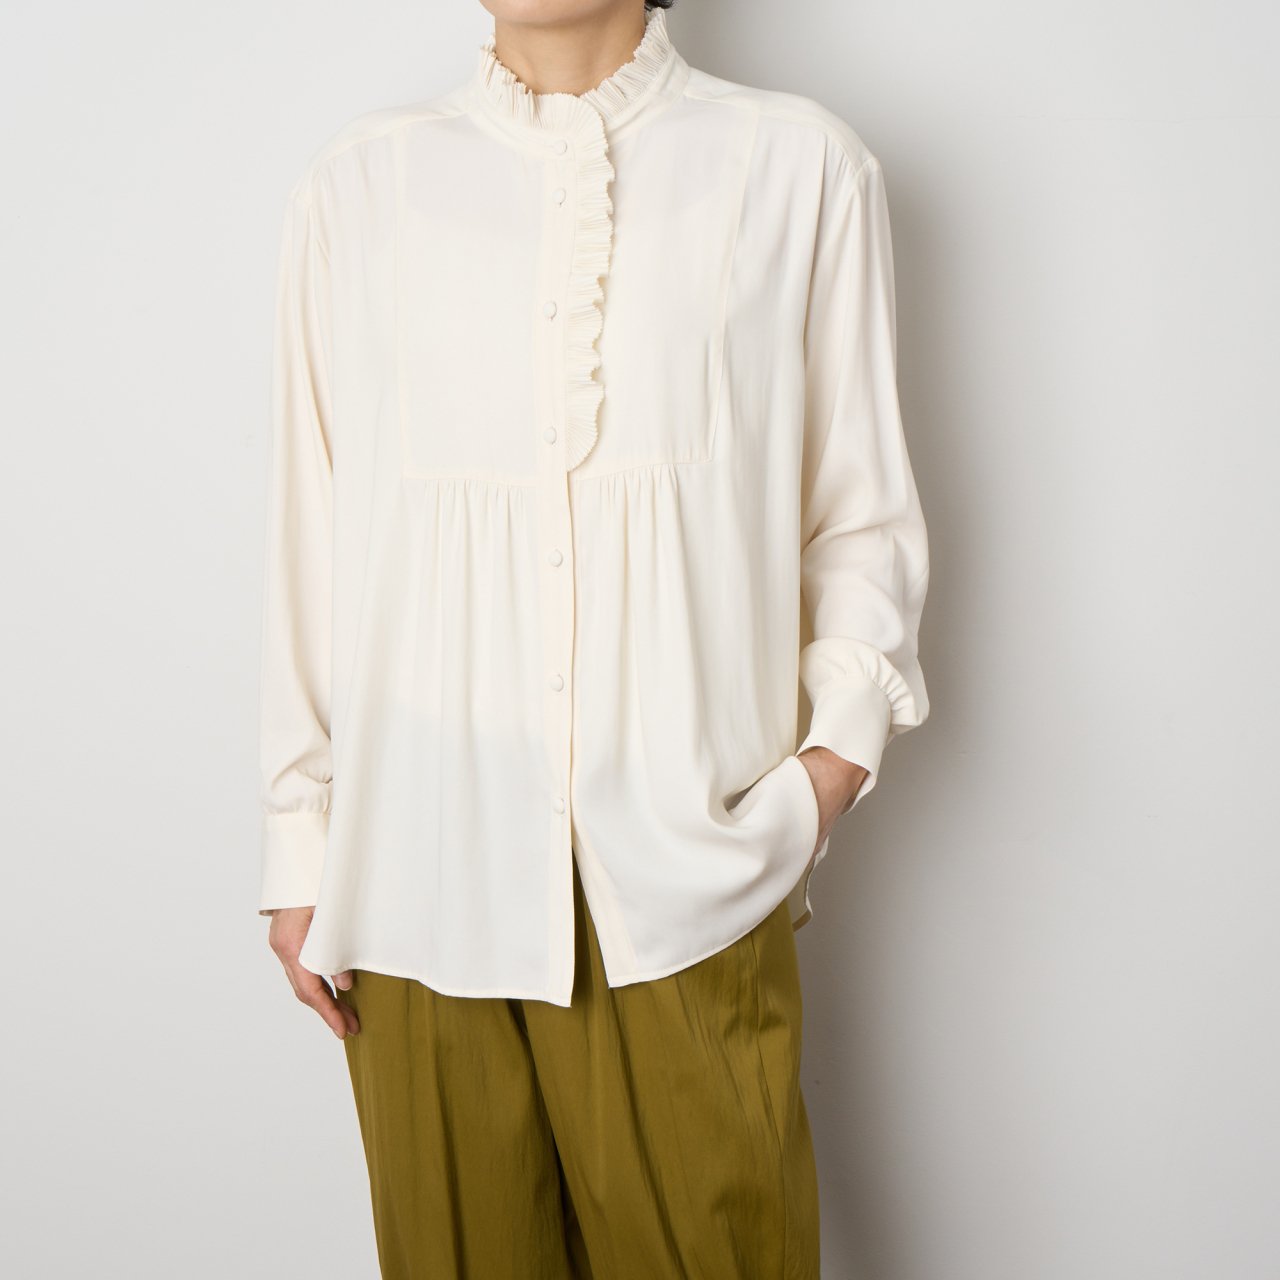 PaleJutePleated blouse sophievanilla white - Pale Jute